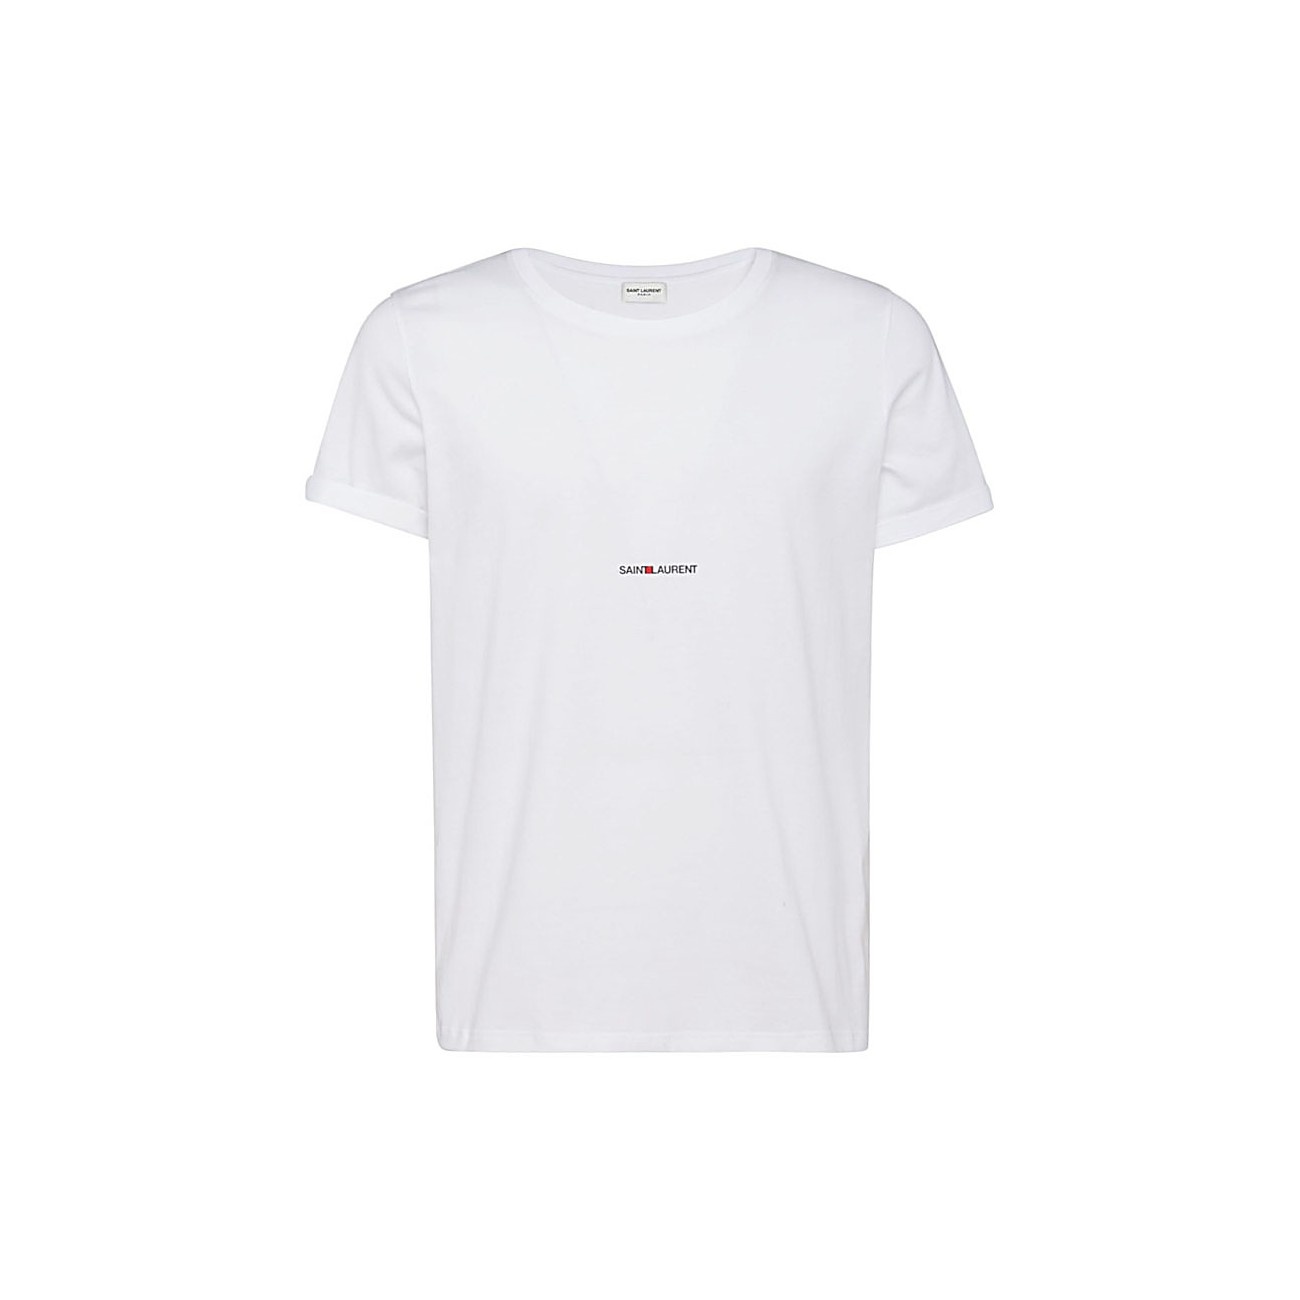 white cotton t-shirt - 1